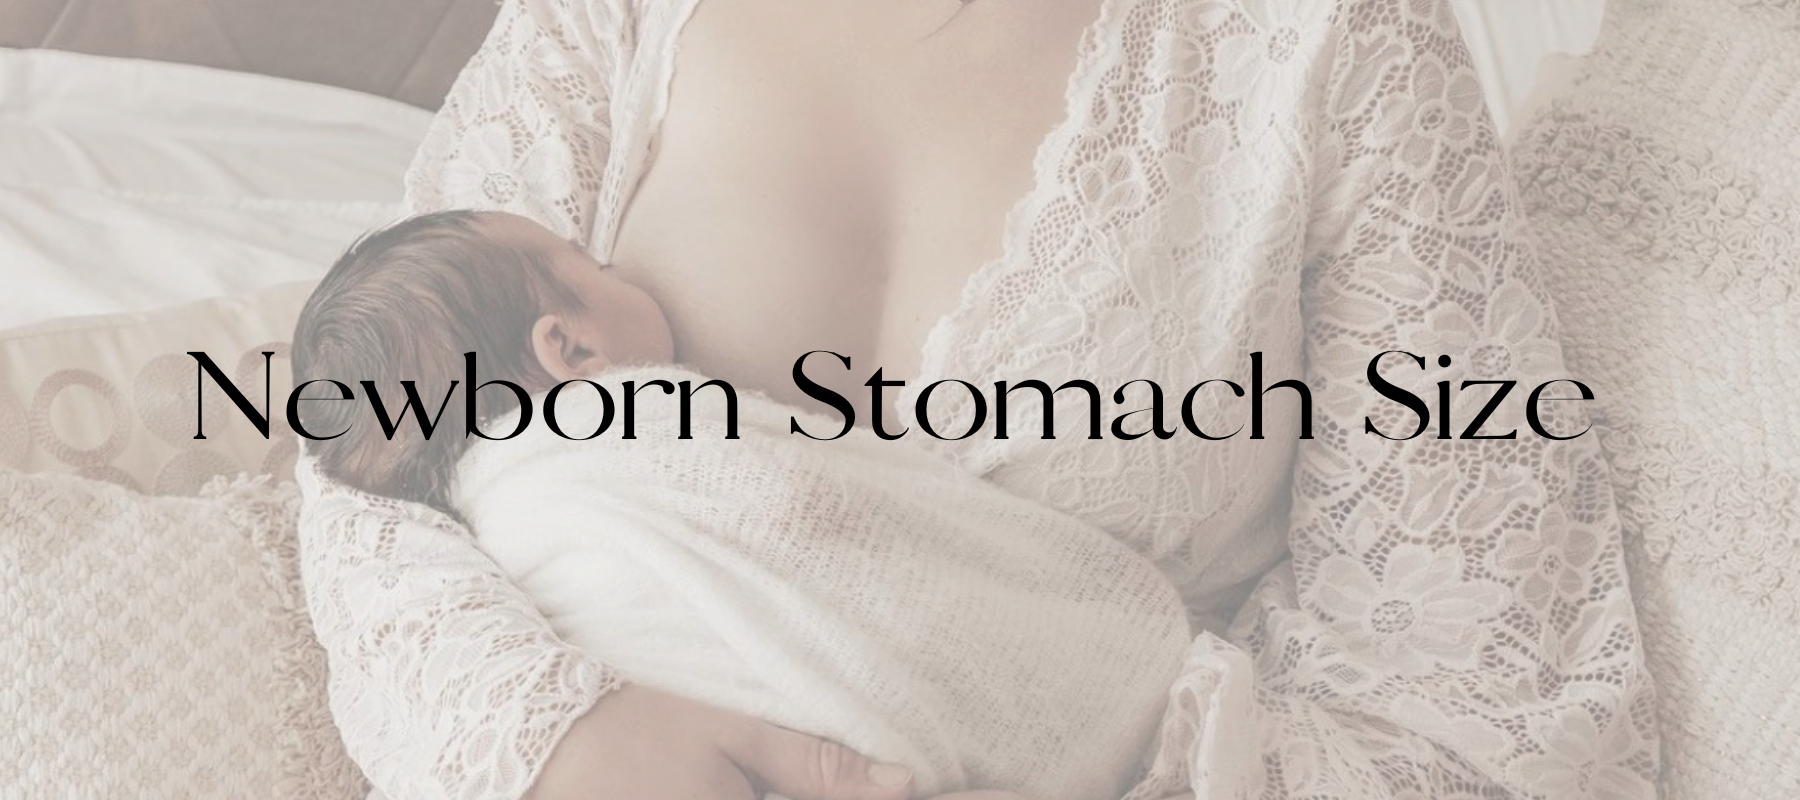 Newborn Stomach Size